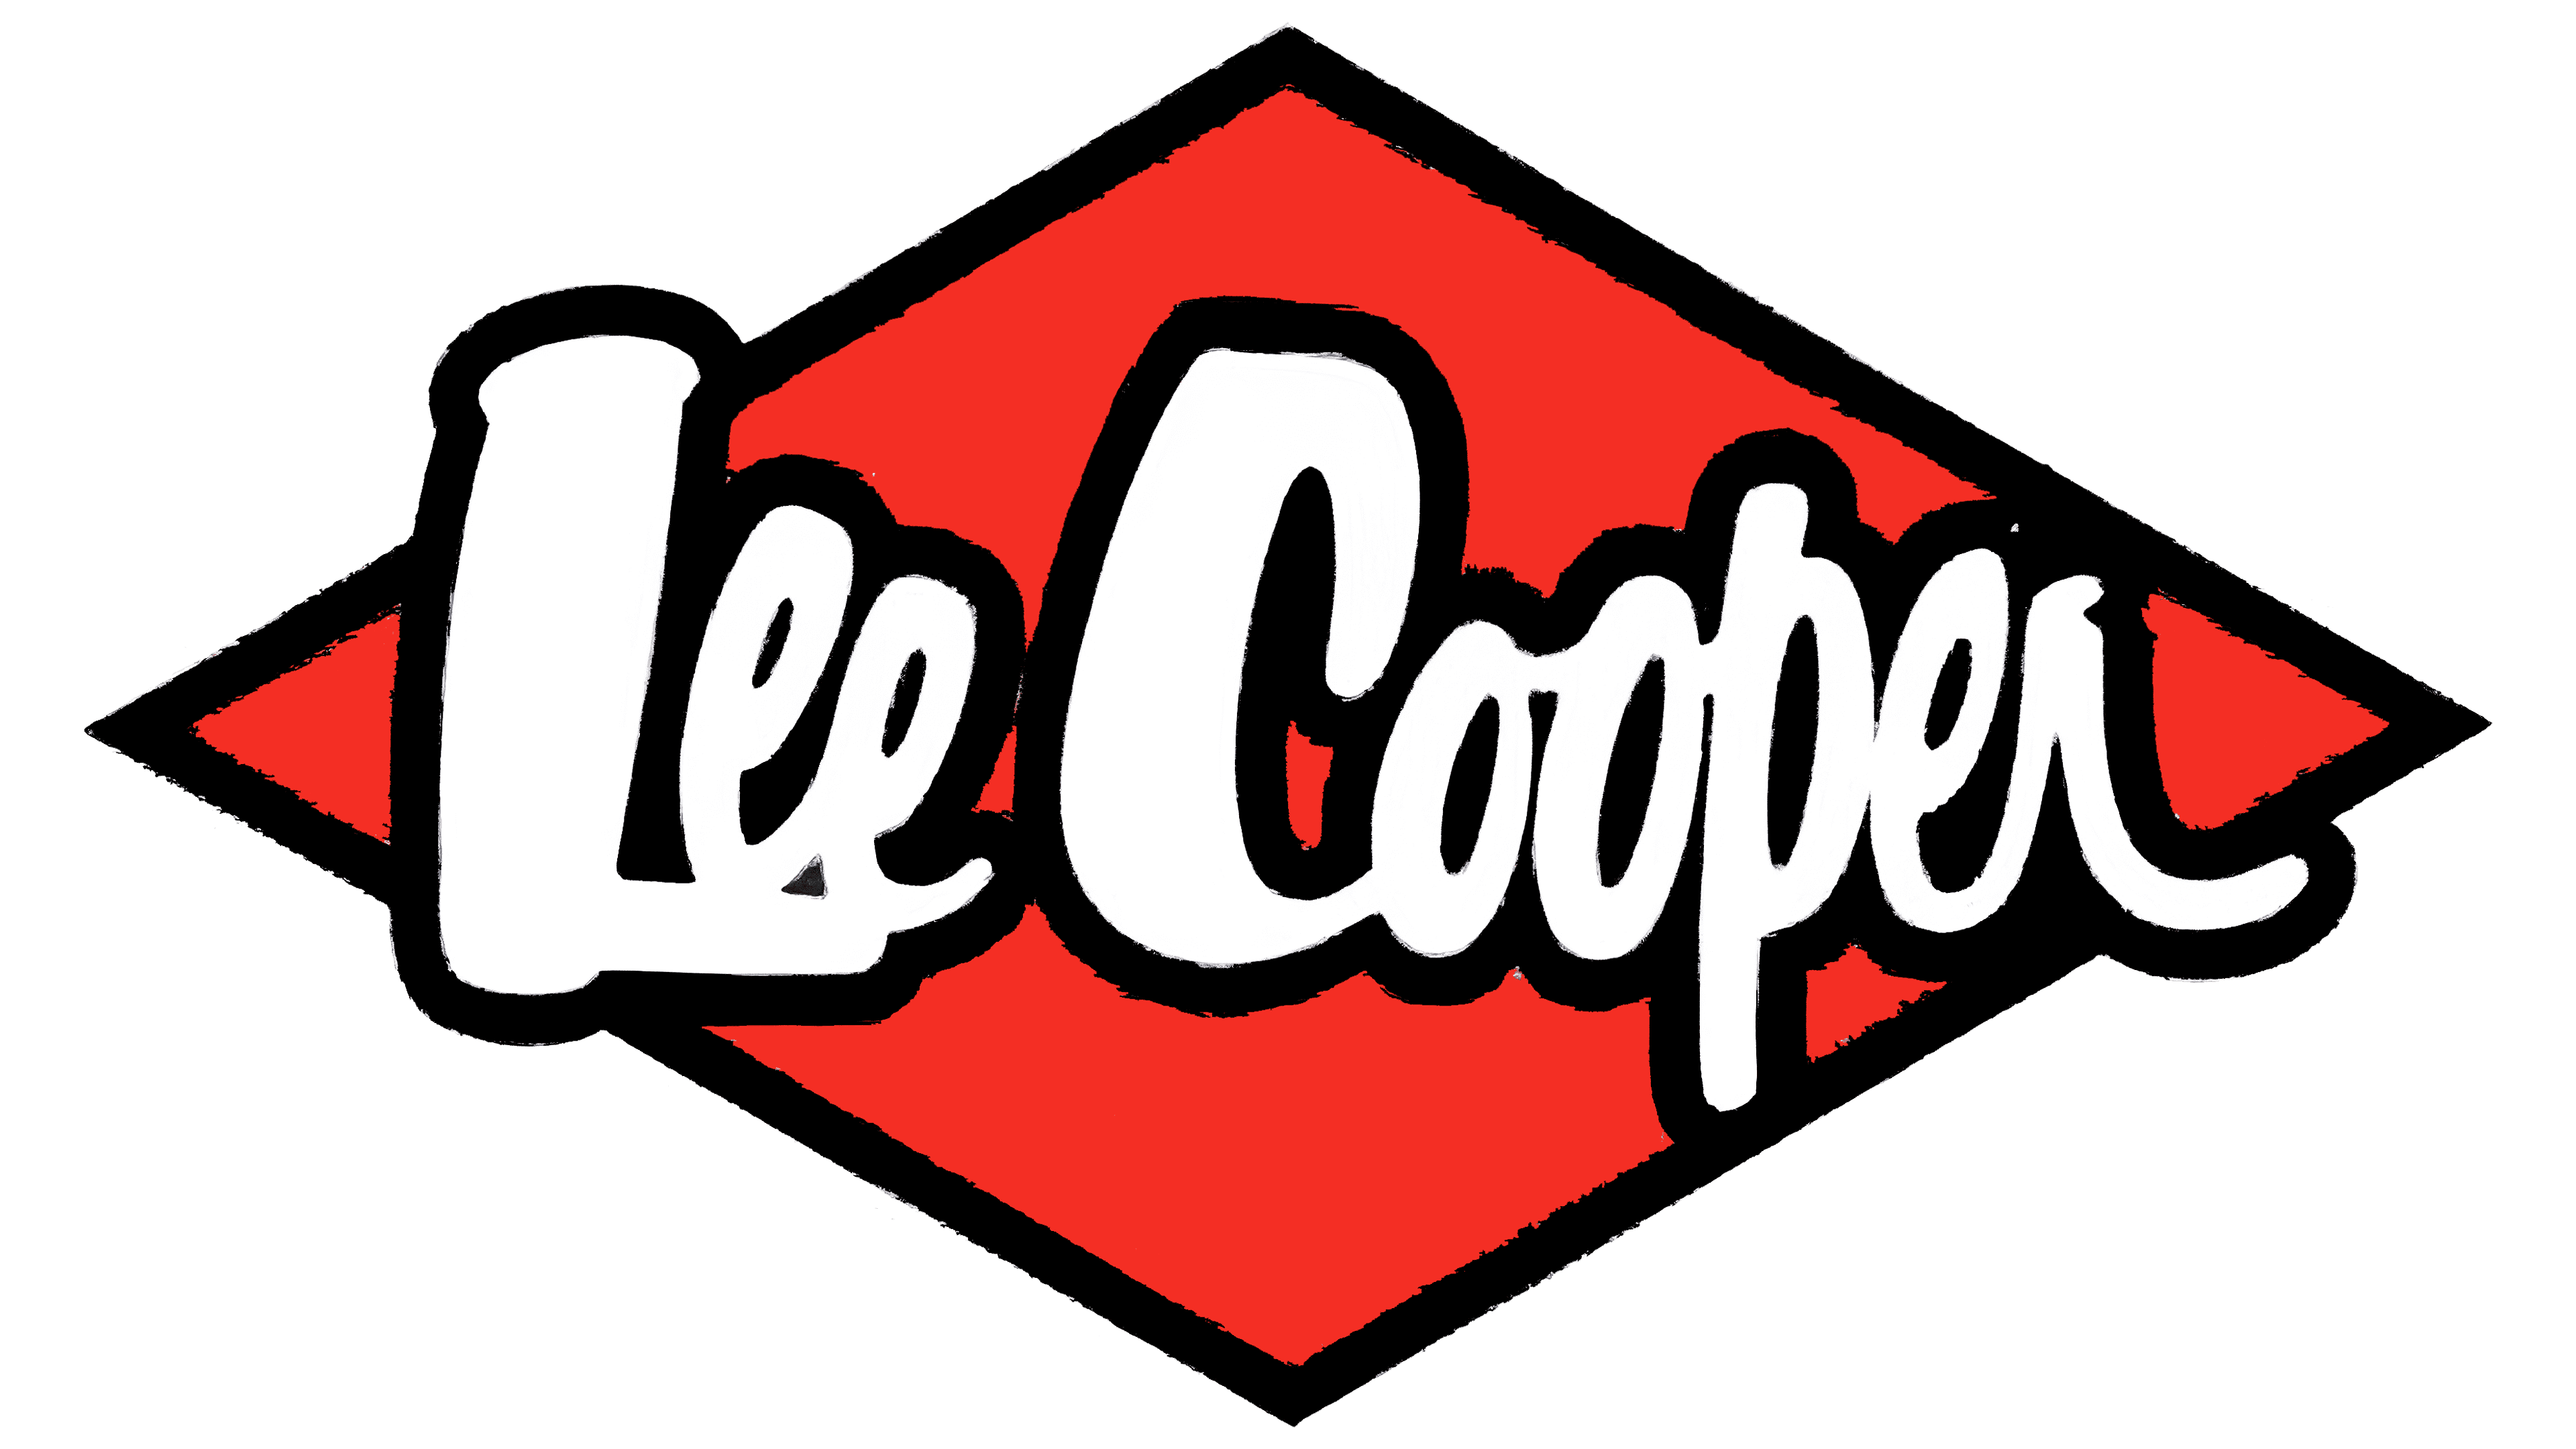 Aggregate more than 77 lee cooper logo super hot - ceg.edu.vn